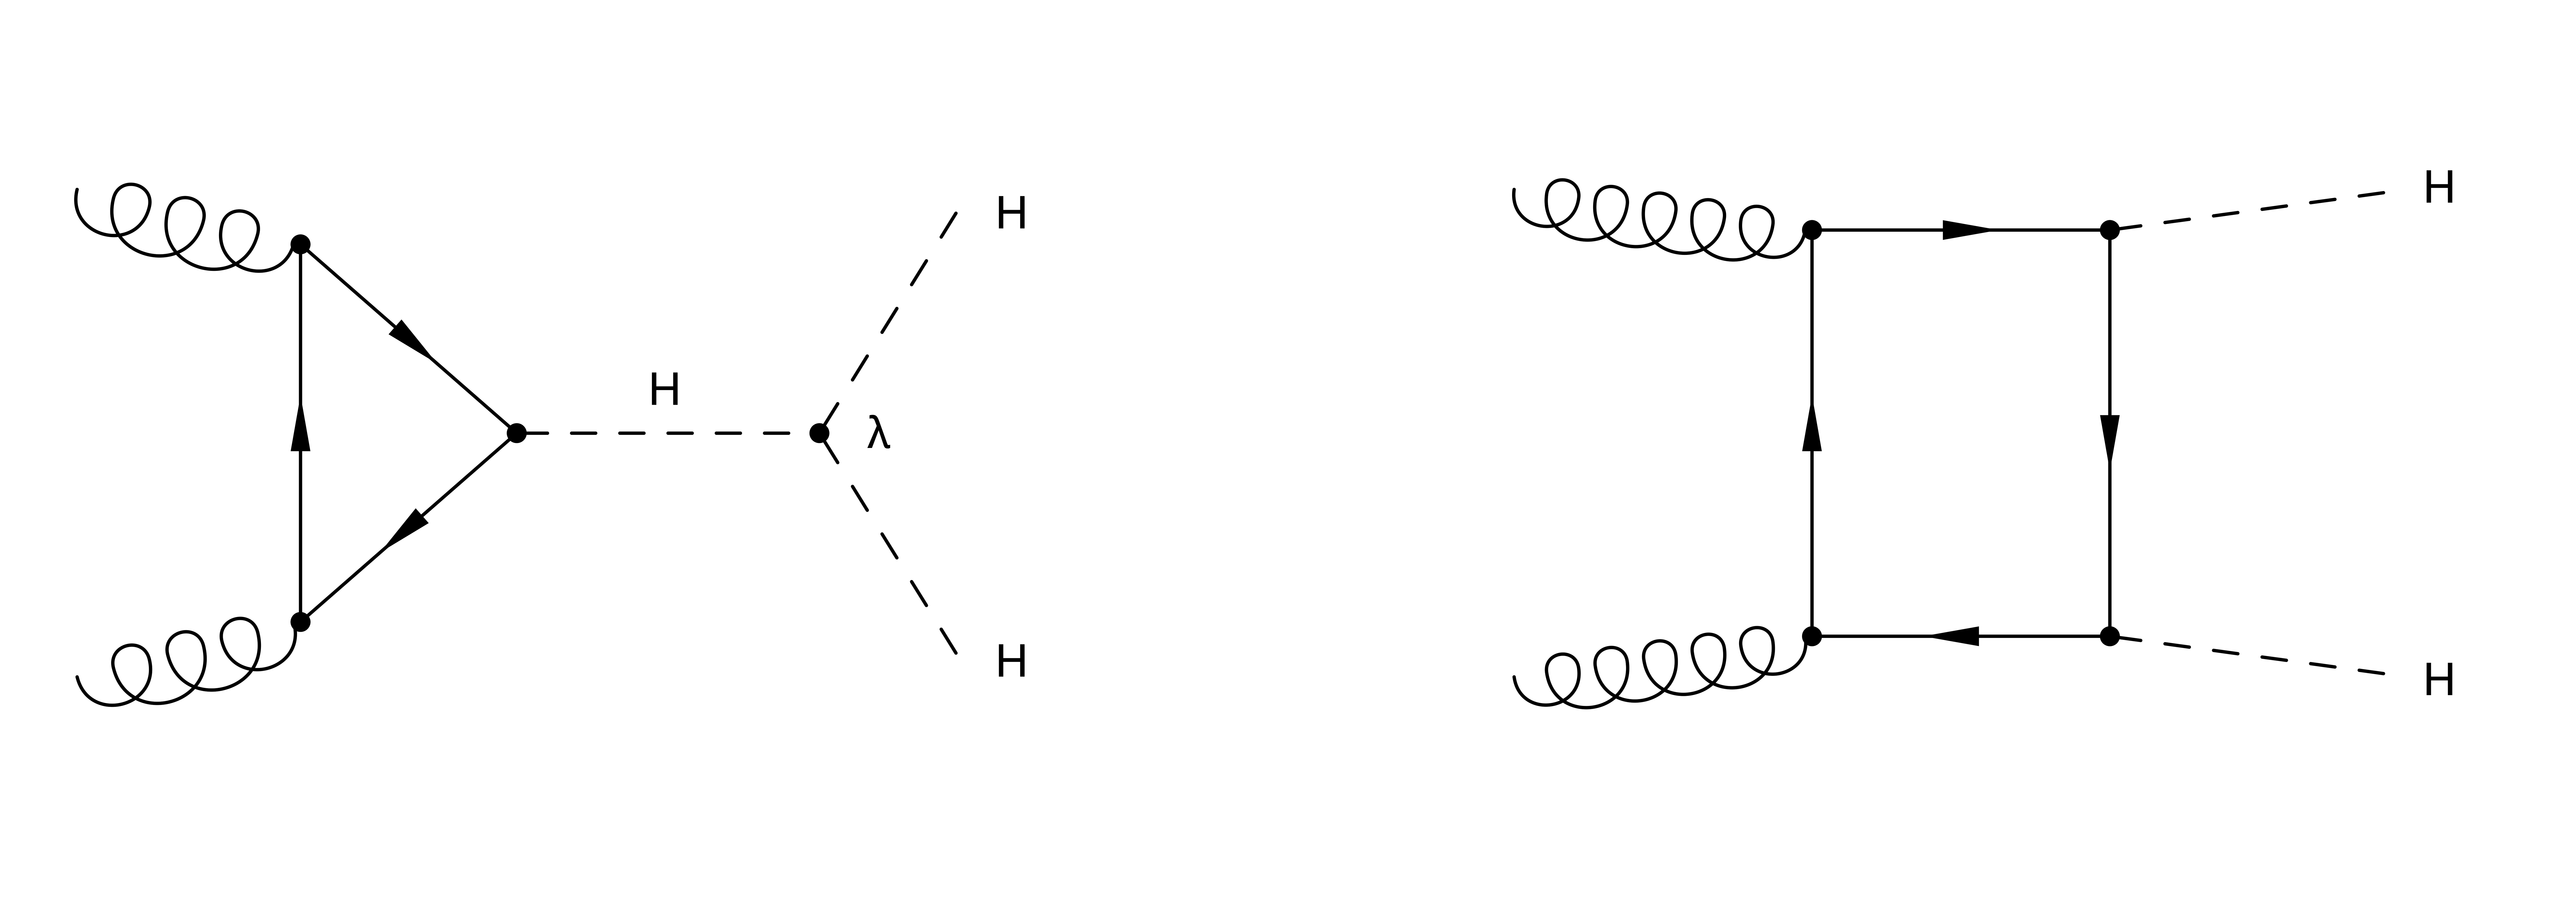 two feynman diagrams